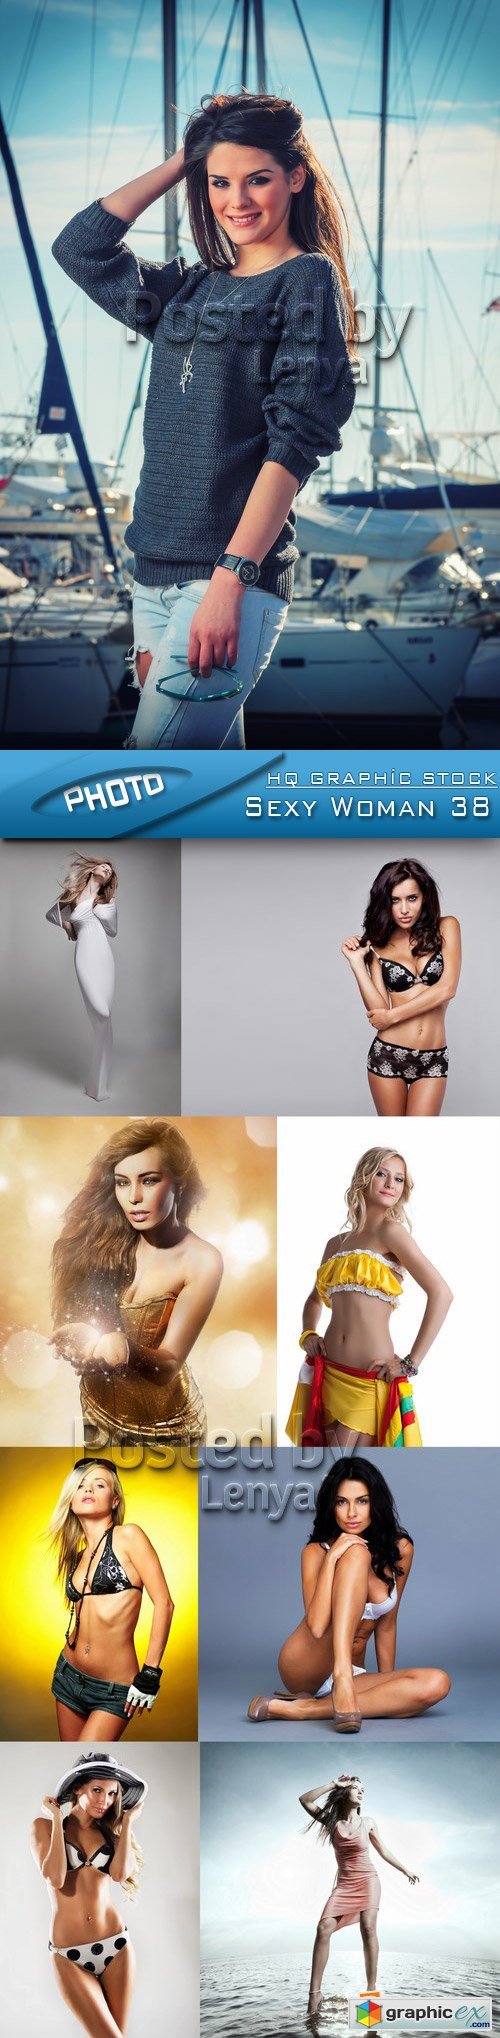 Stock Photo - Sexy Woman 38